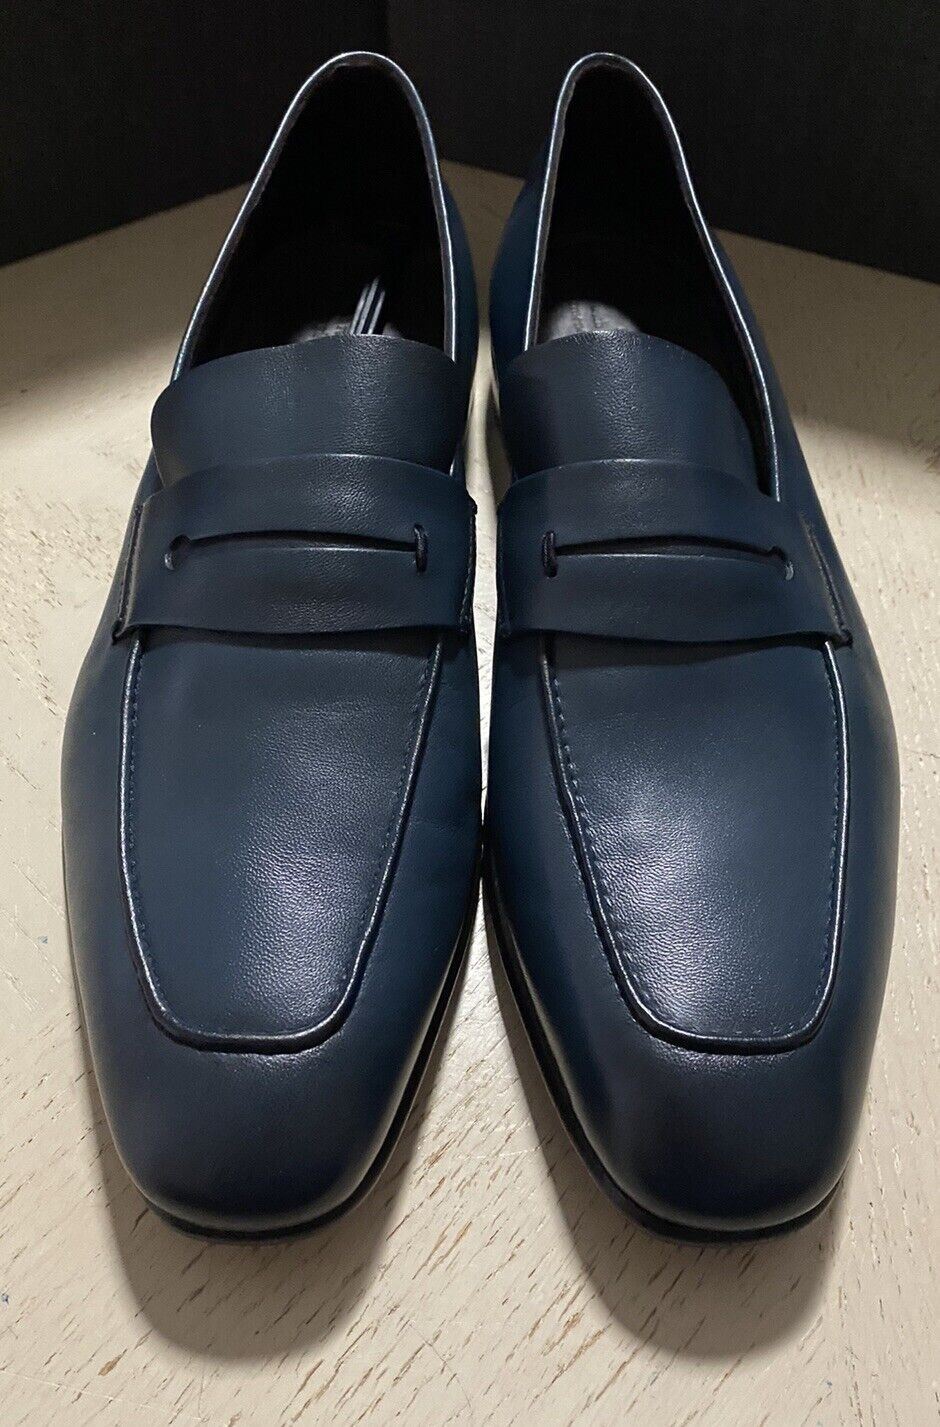 Neu $775 Ermenegildo Zegna Iconic Mokassin Leder Loafer Schuhe MD Blau 10 US